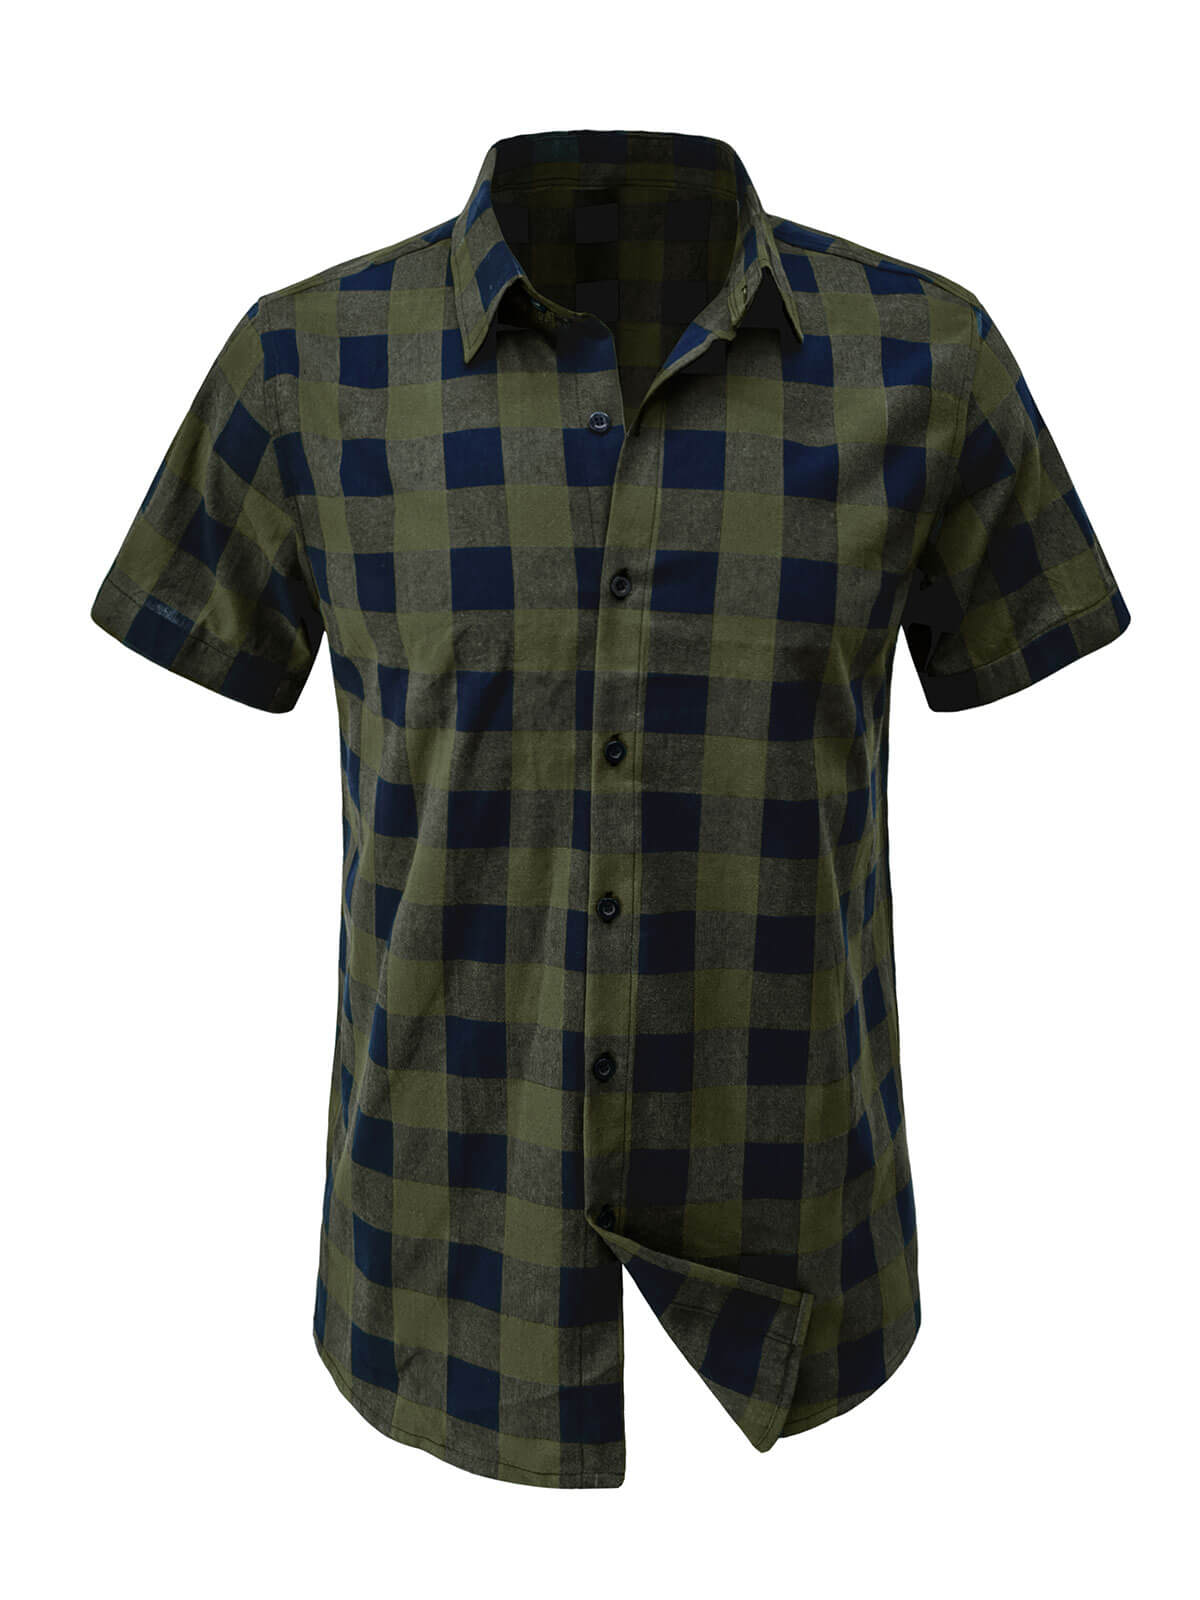 Men's Casual Plaid Cotton Button Up Check Short Sleeve Shirt